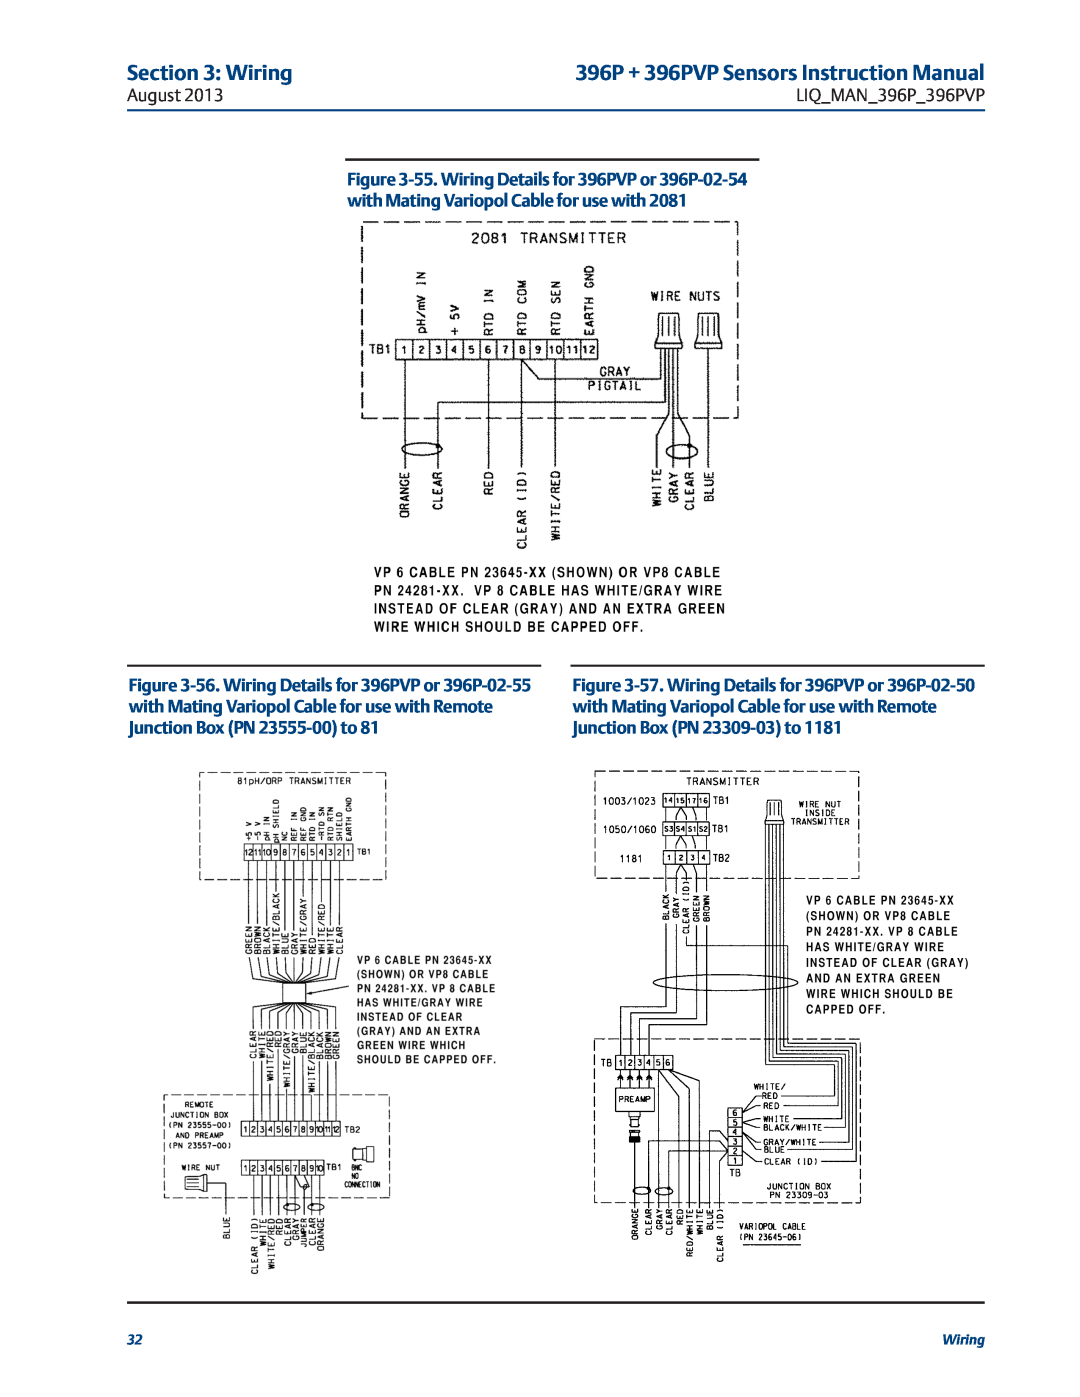 Emerson instruction manual Wiring, 396P + 396PVP Sensors Instruction Manual 